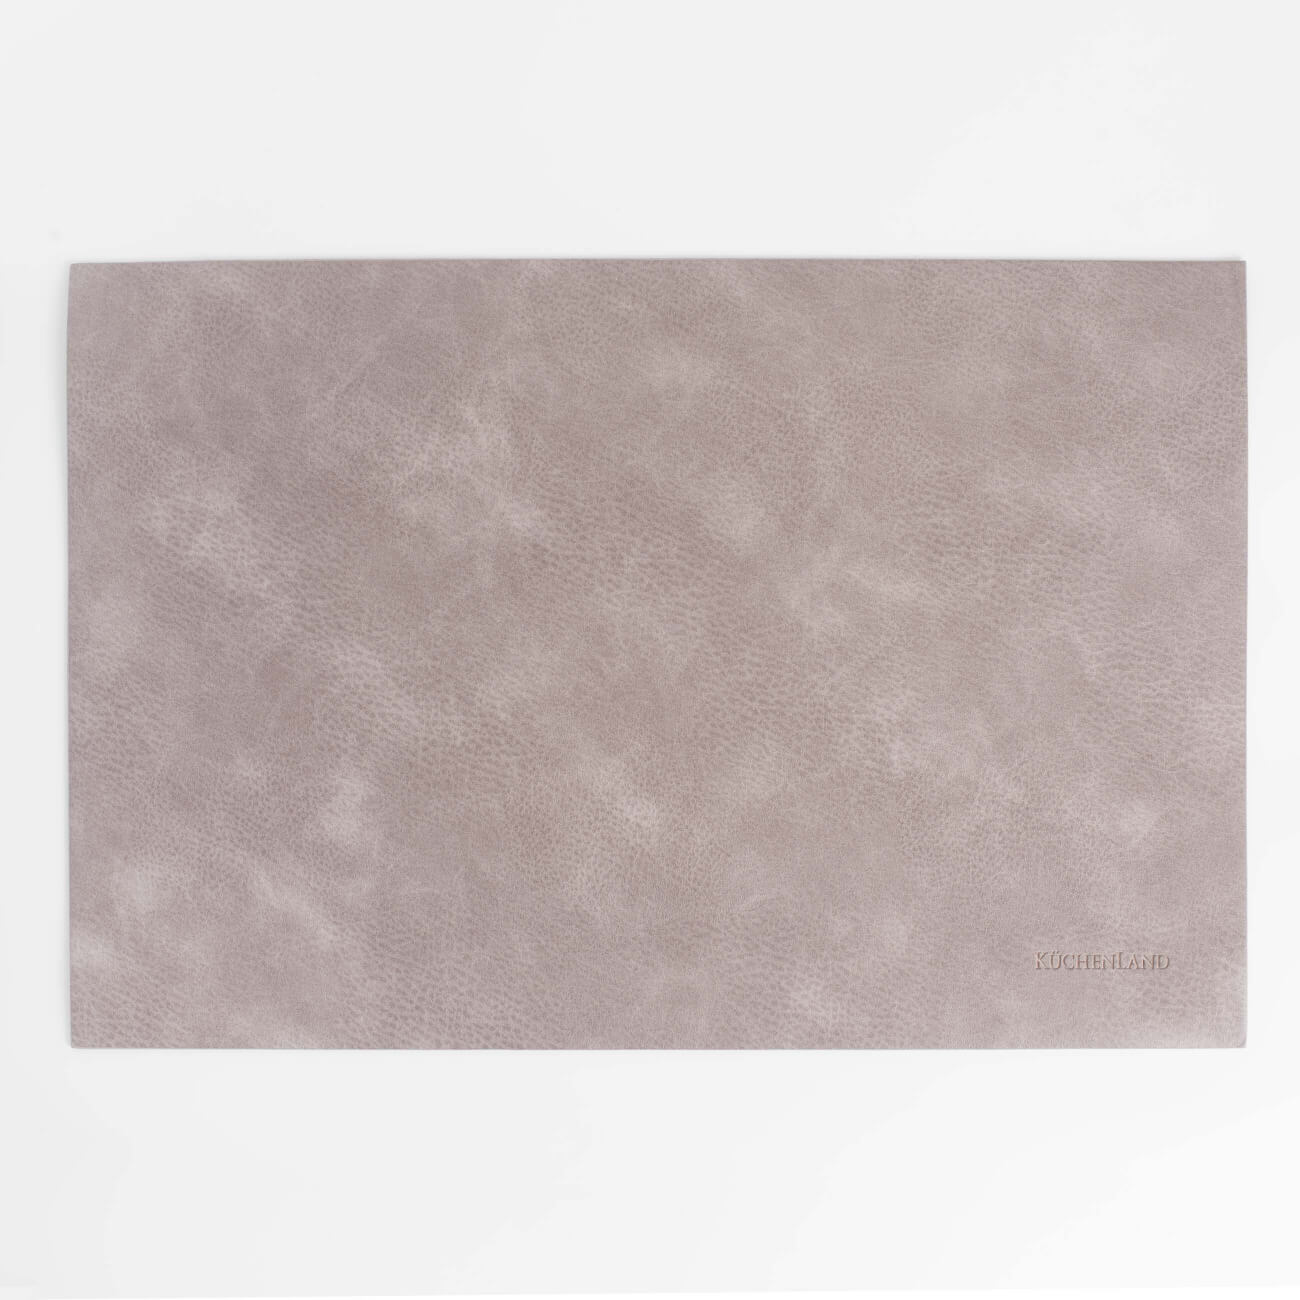 Napkin for appliances, 30x45 cm, PVC, rectangular, gray-brown, Rock изображение № 1